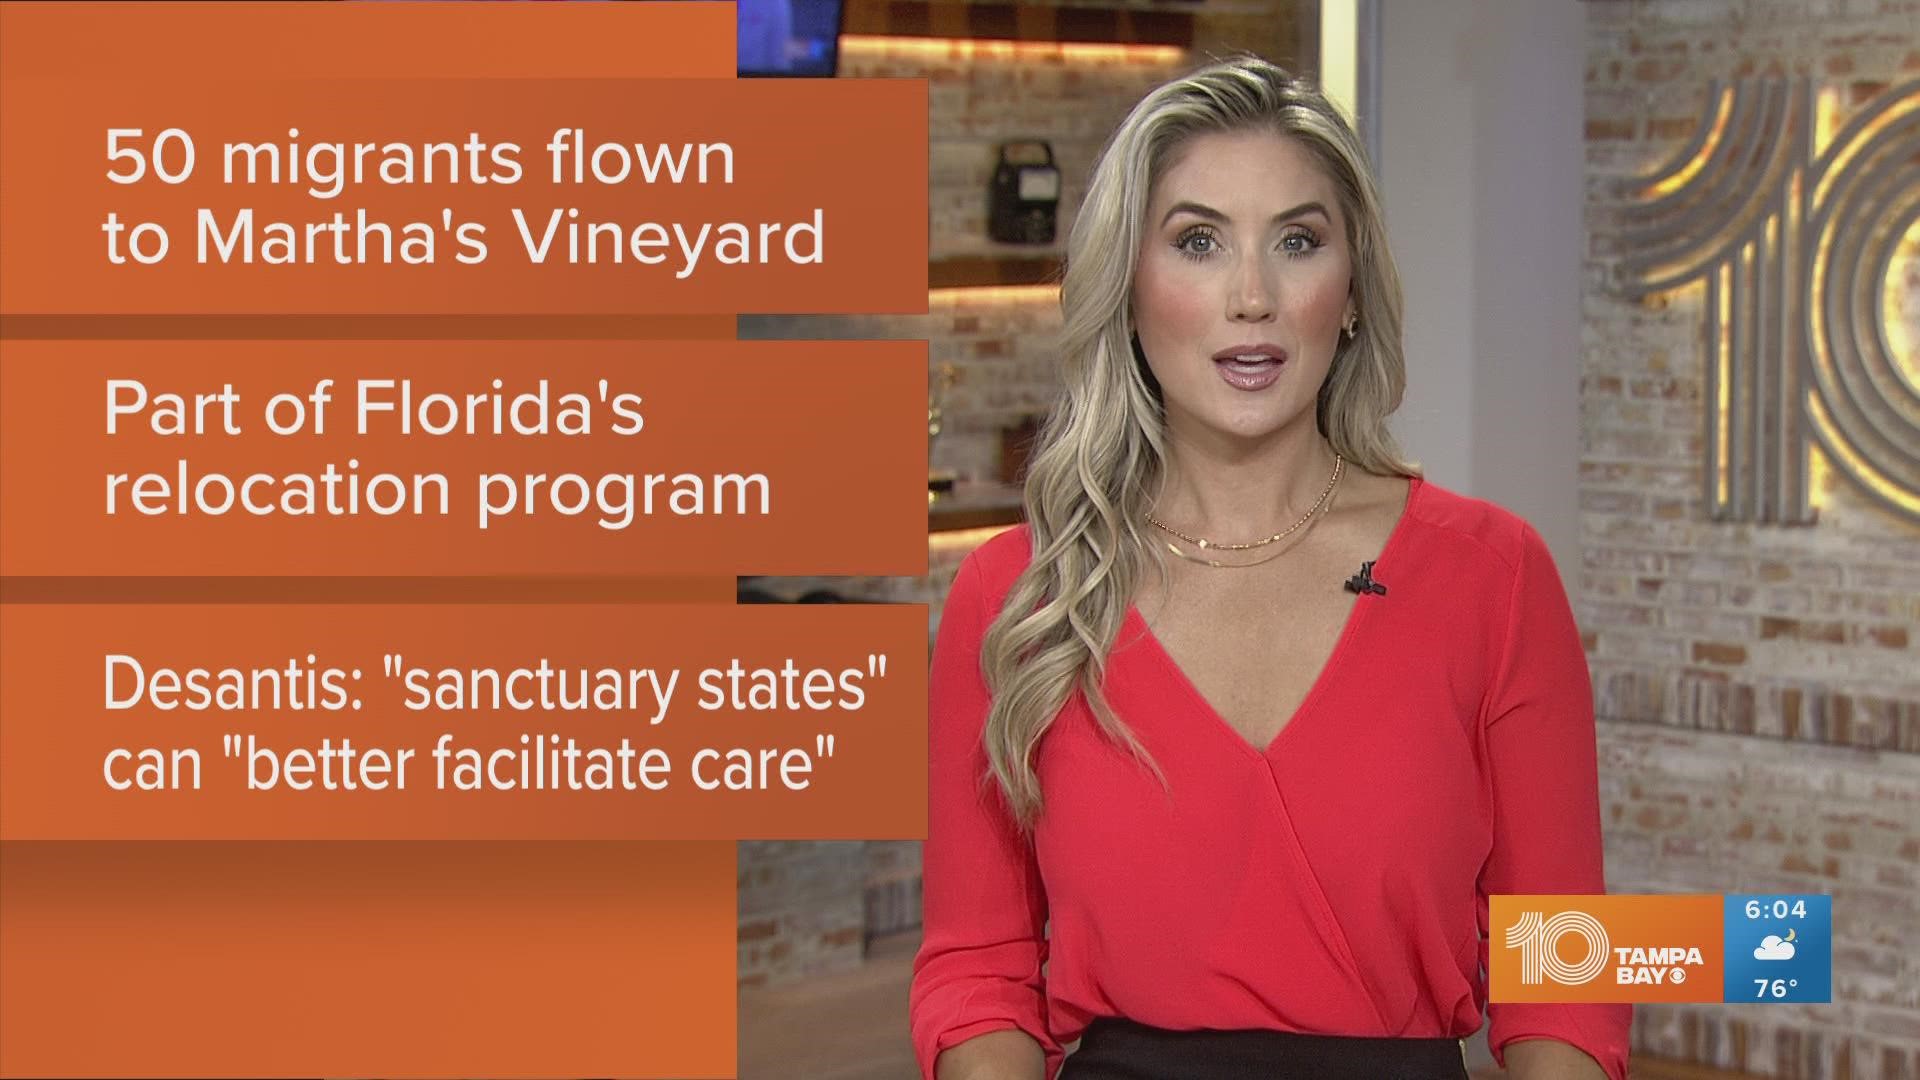 Florida Gov. Ron DeSantis said the migrants were sent there as part of Florida's relocation program, CBS News reports.